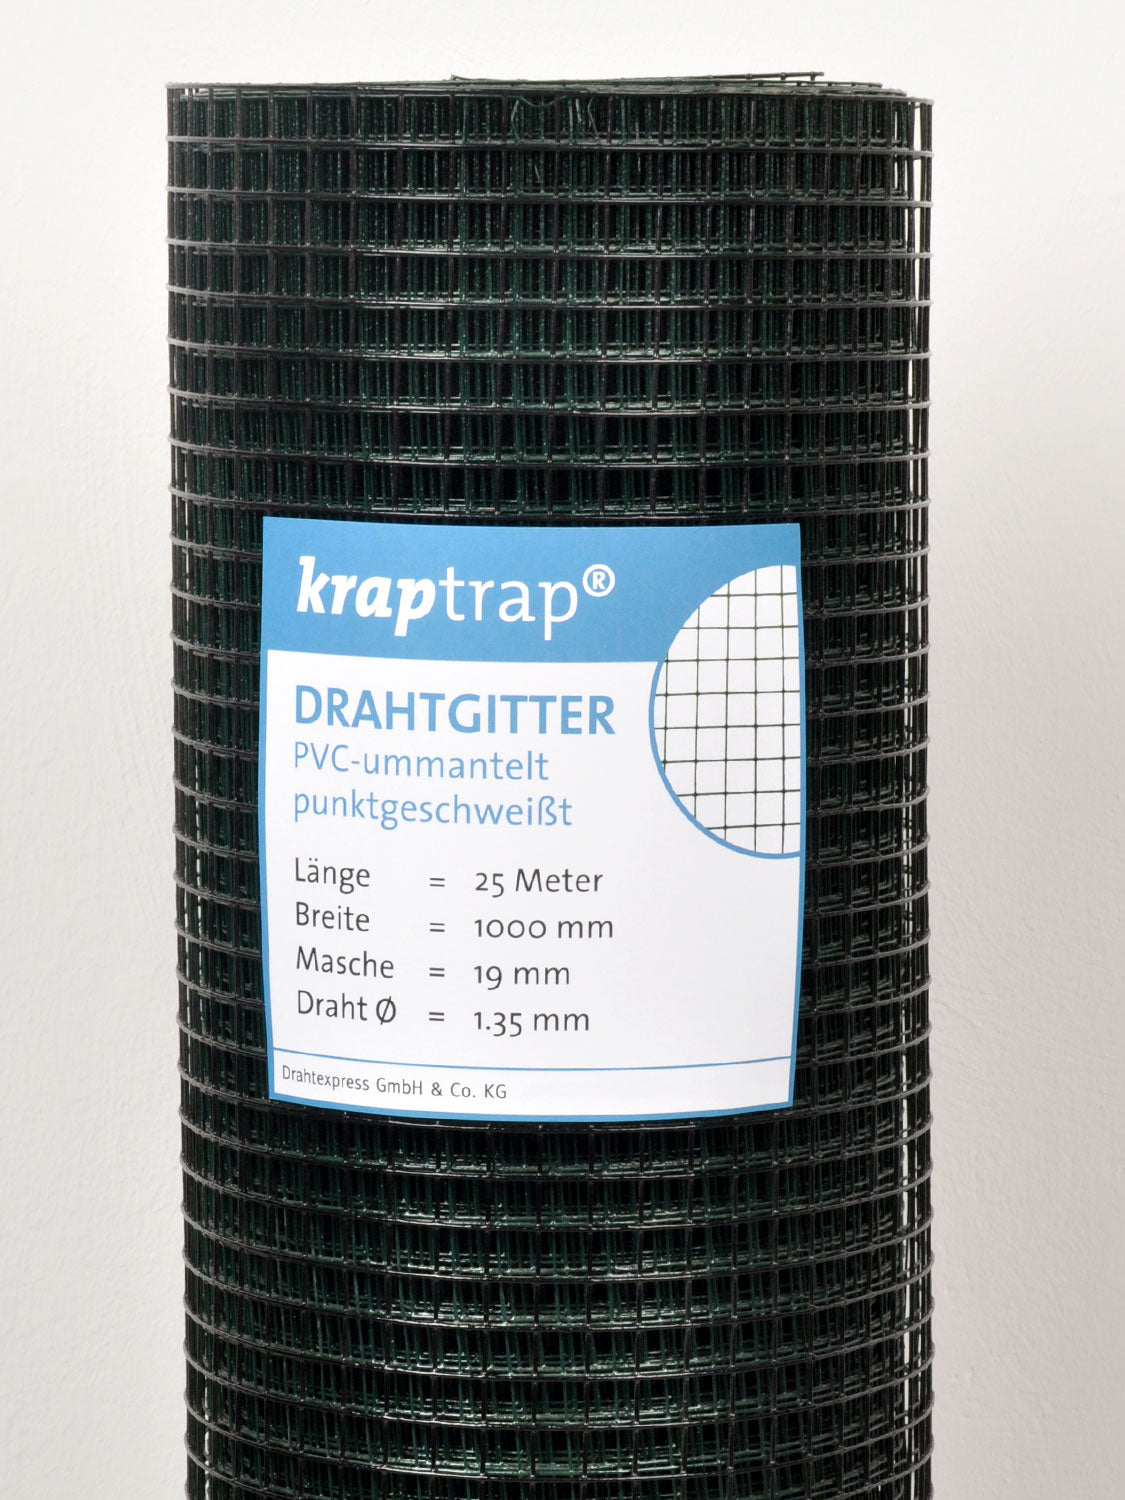 Kraptrap® Volierendraht Drahtgitter 19 mm Masche, 100 cm breit, schwarz ummantelt